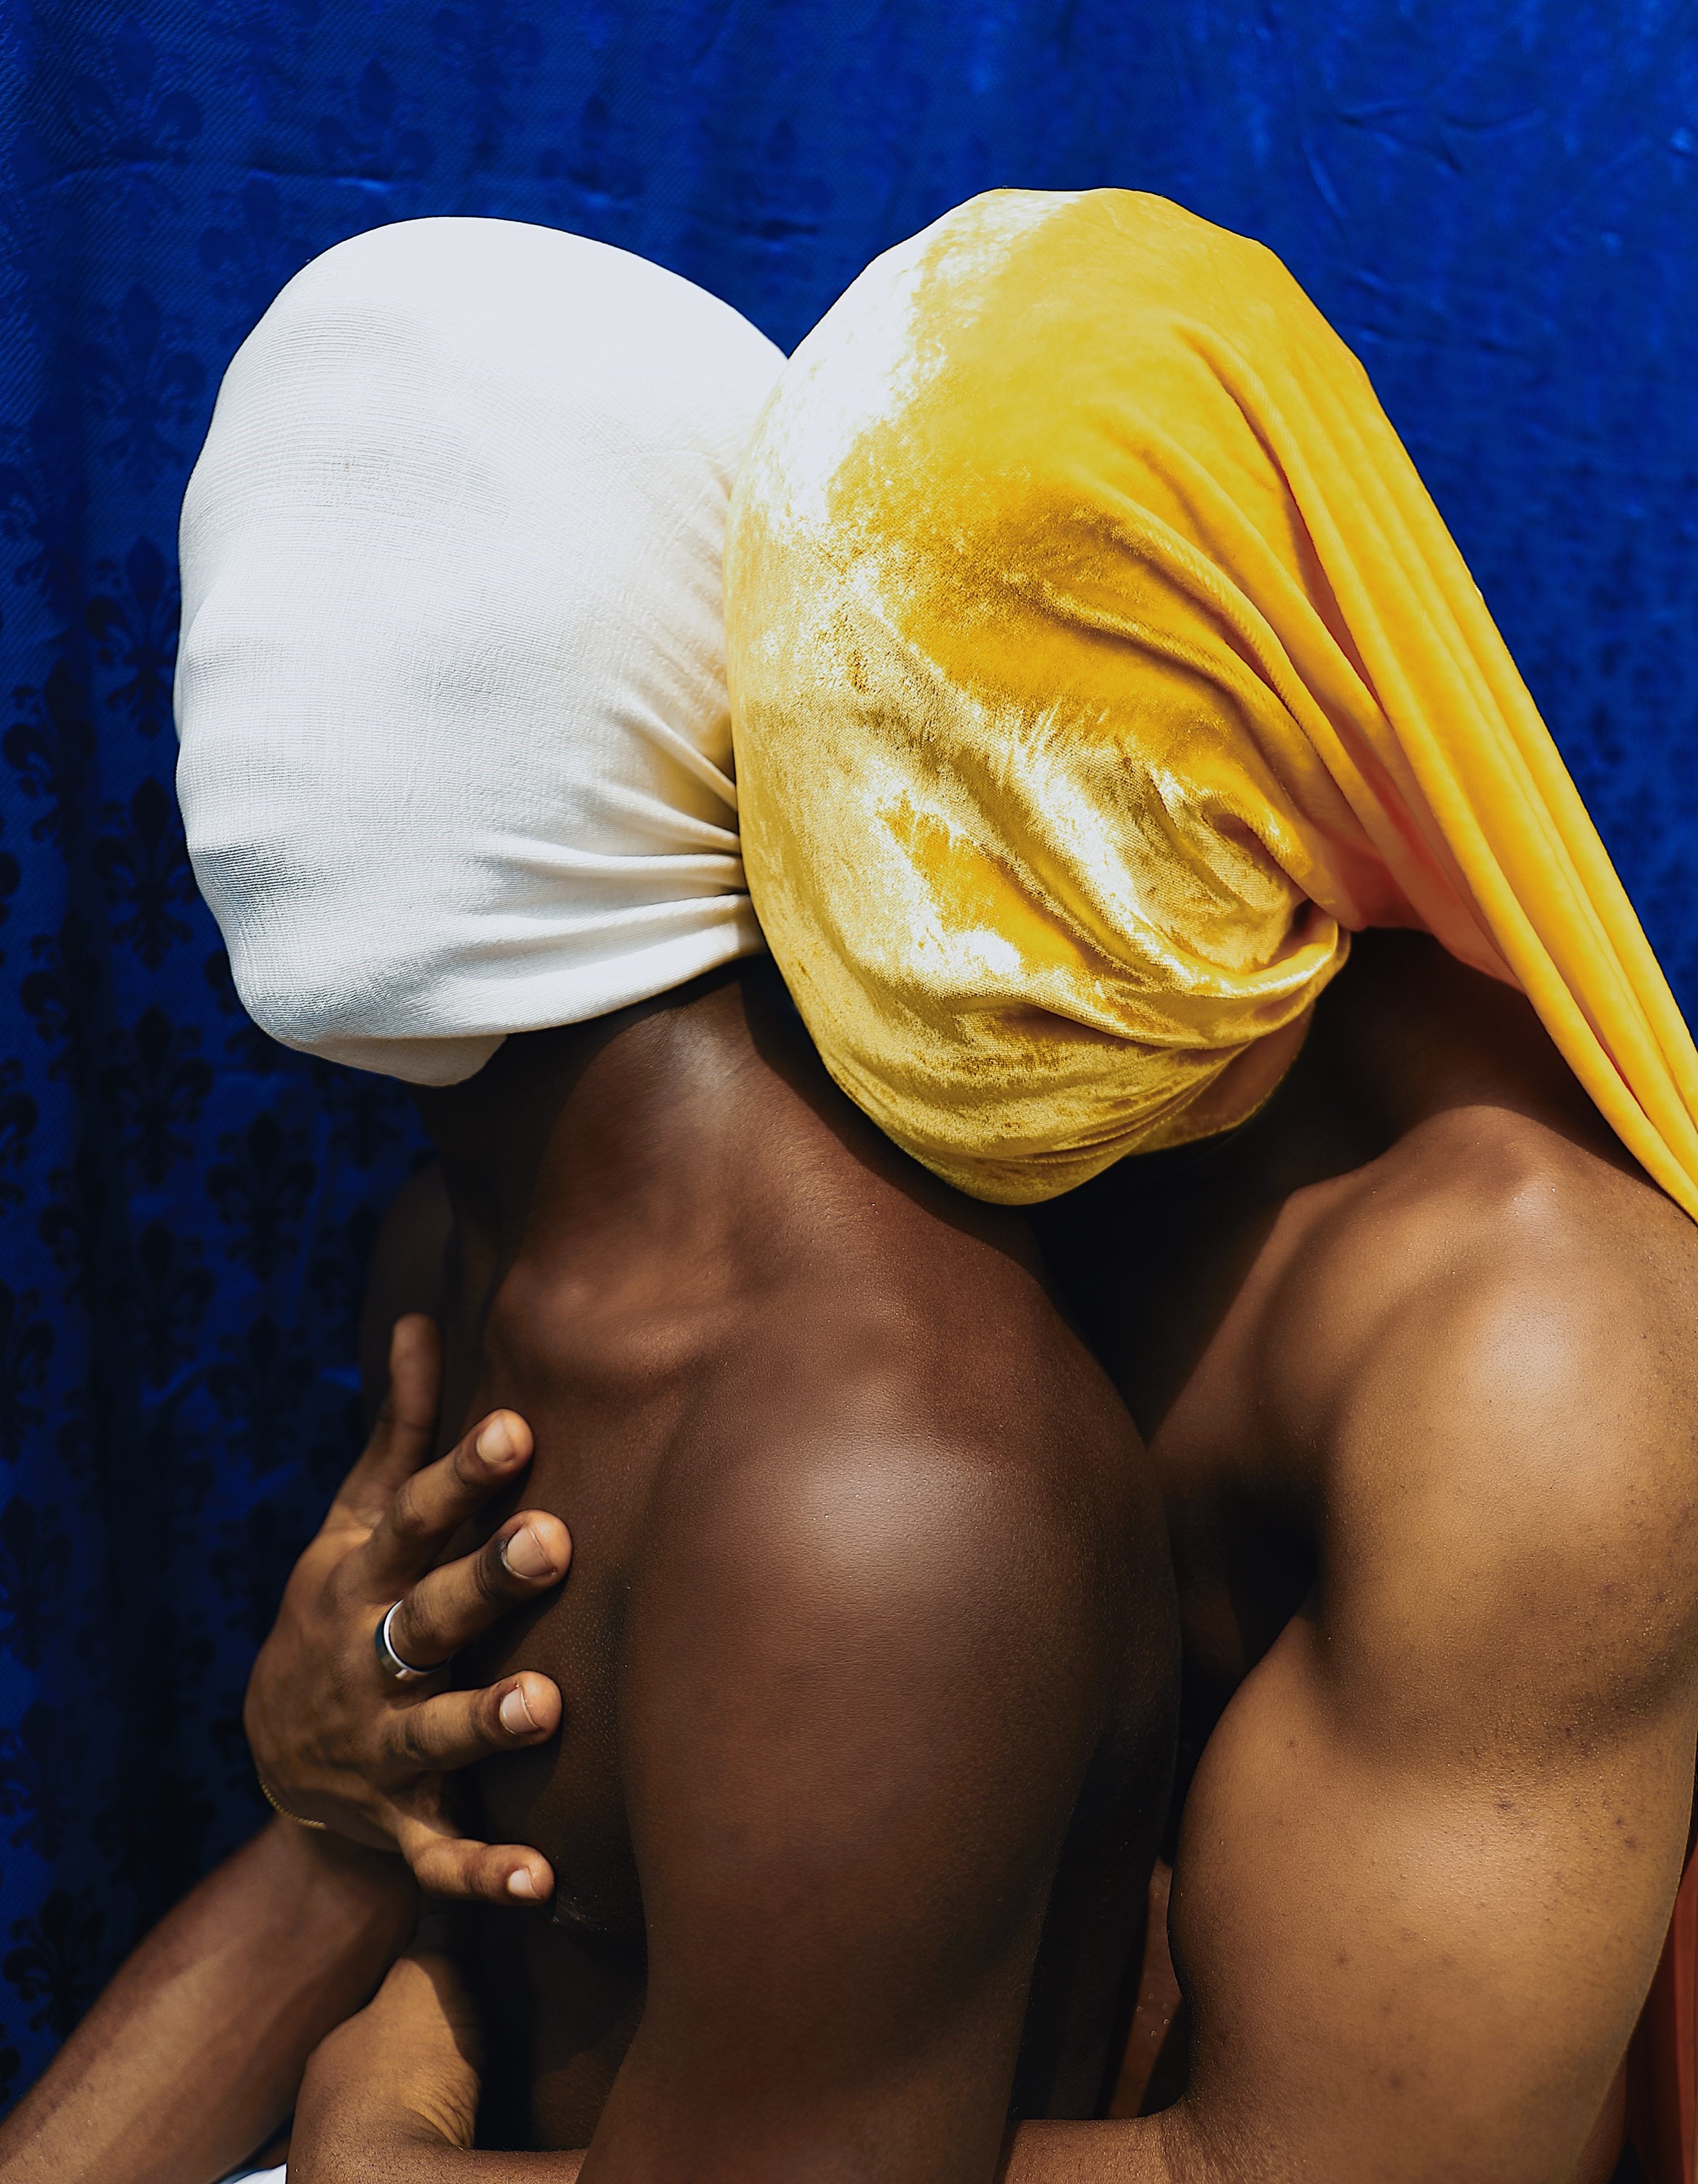 Zz Pronstar Com - What it's like being a gay porn star in Nigeria | Dazed